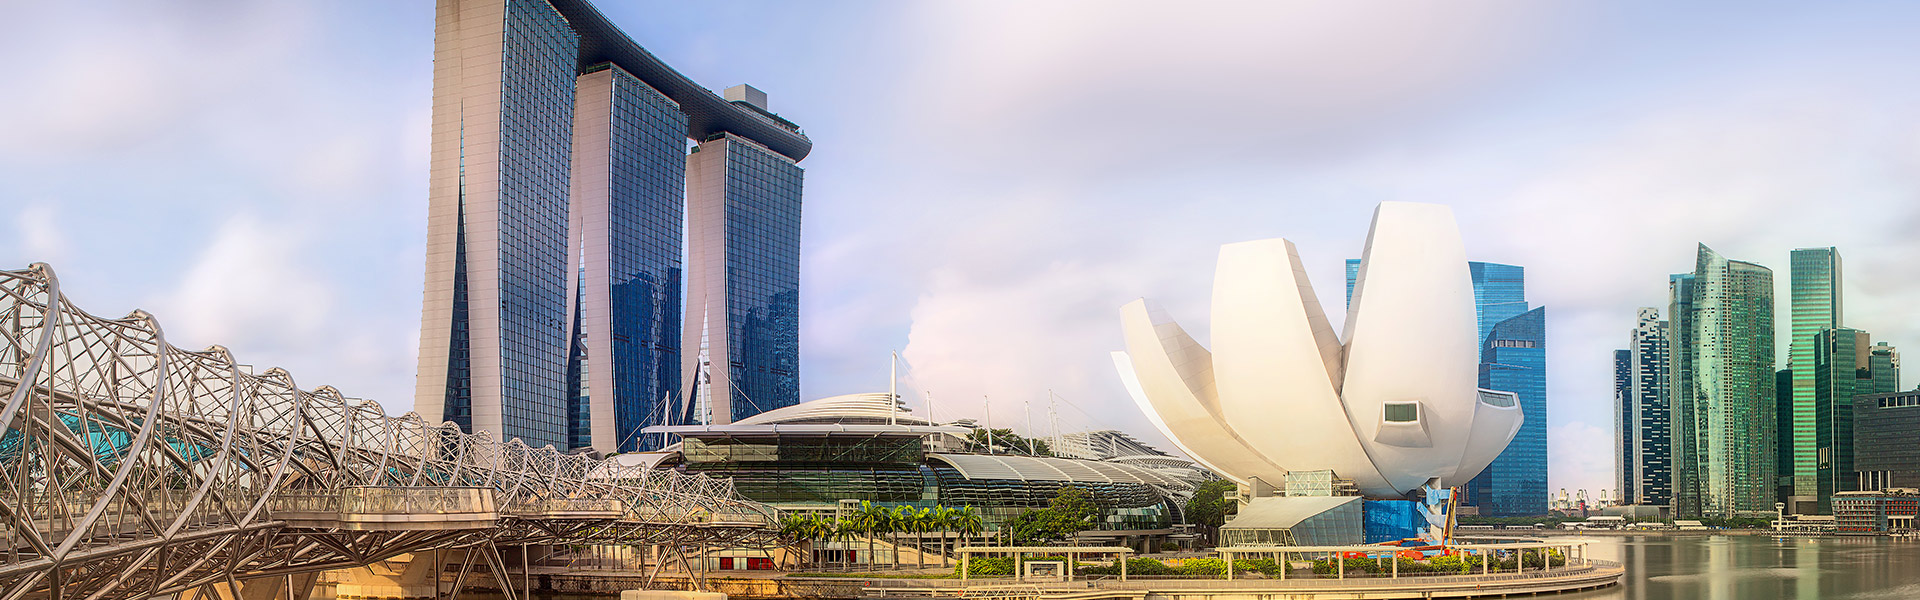 Marina Bay Sands Hotel - Singapore : r/architecture